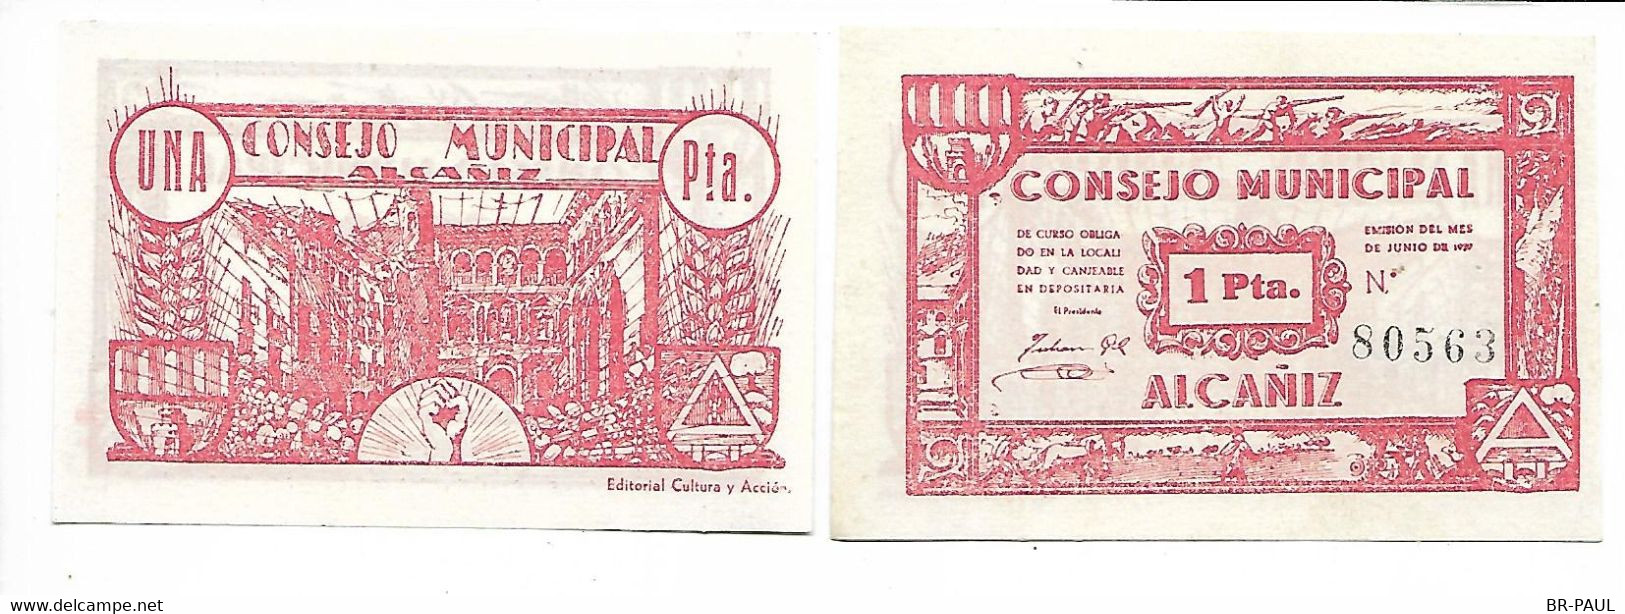 ESPAGNE / UN PESETAS 1937 - CONSEJO MUNICIPAL D'ALCANIZ / BILLET NEUF - 1-2 Pesetas